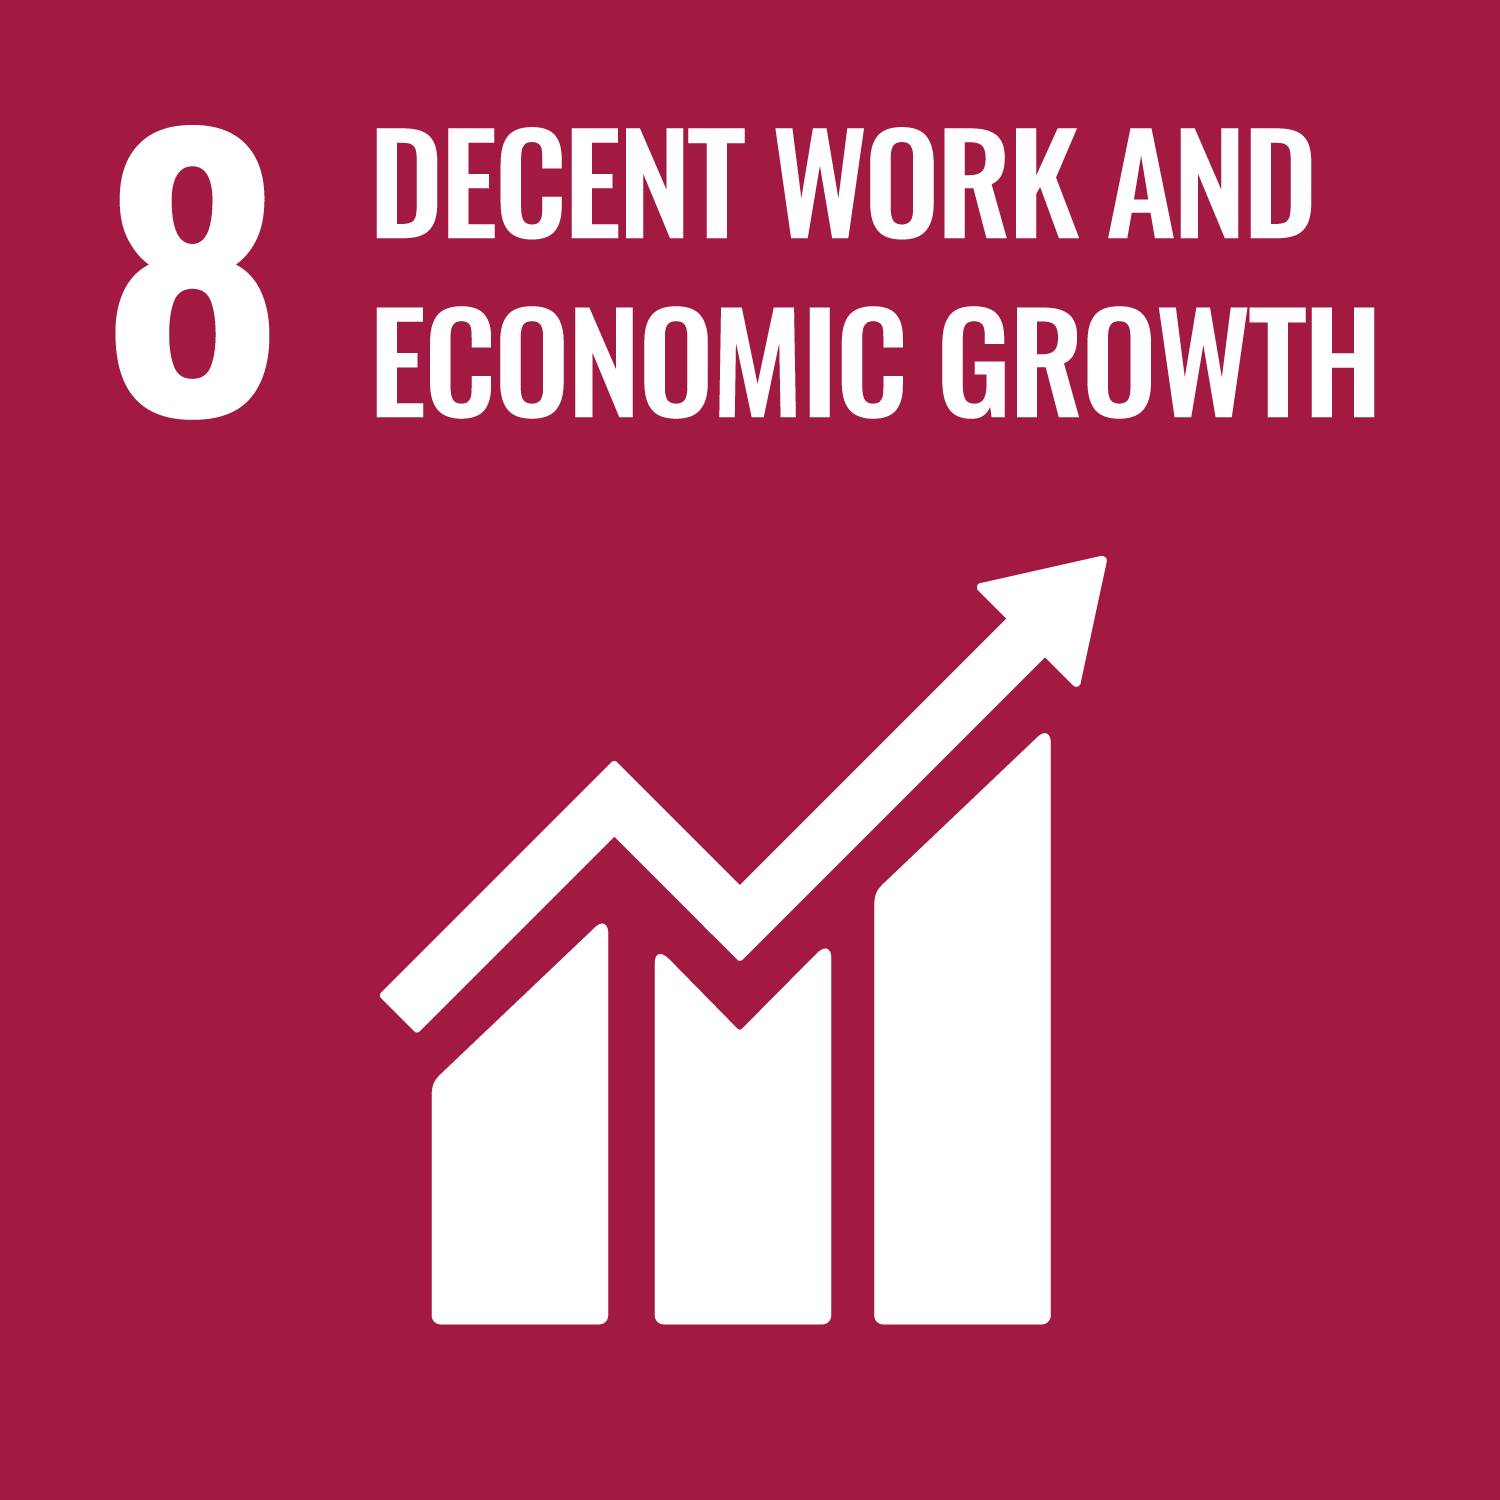 sustainable-development-goals-decent-work-and-economic-growth